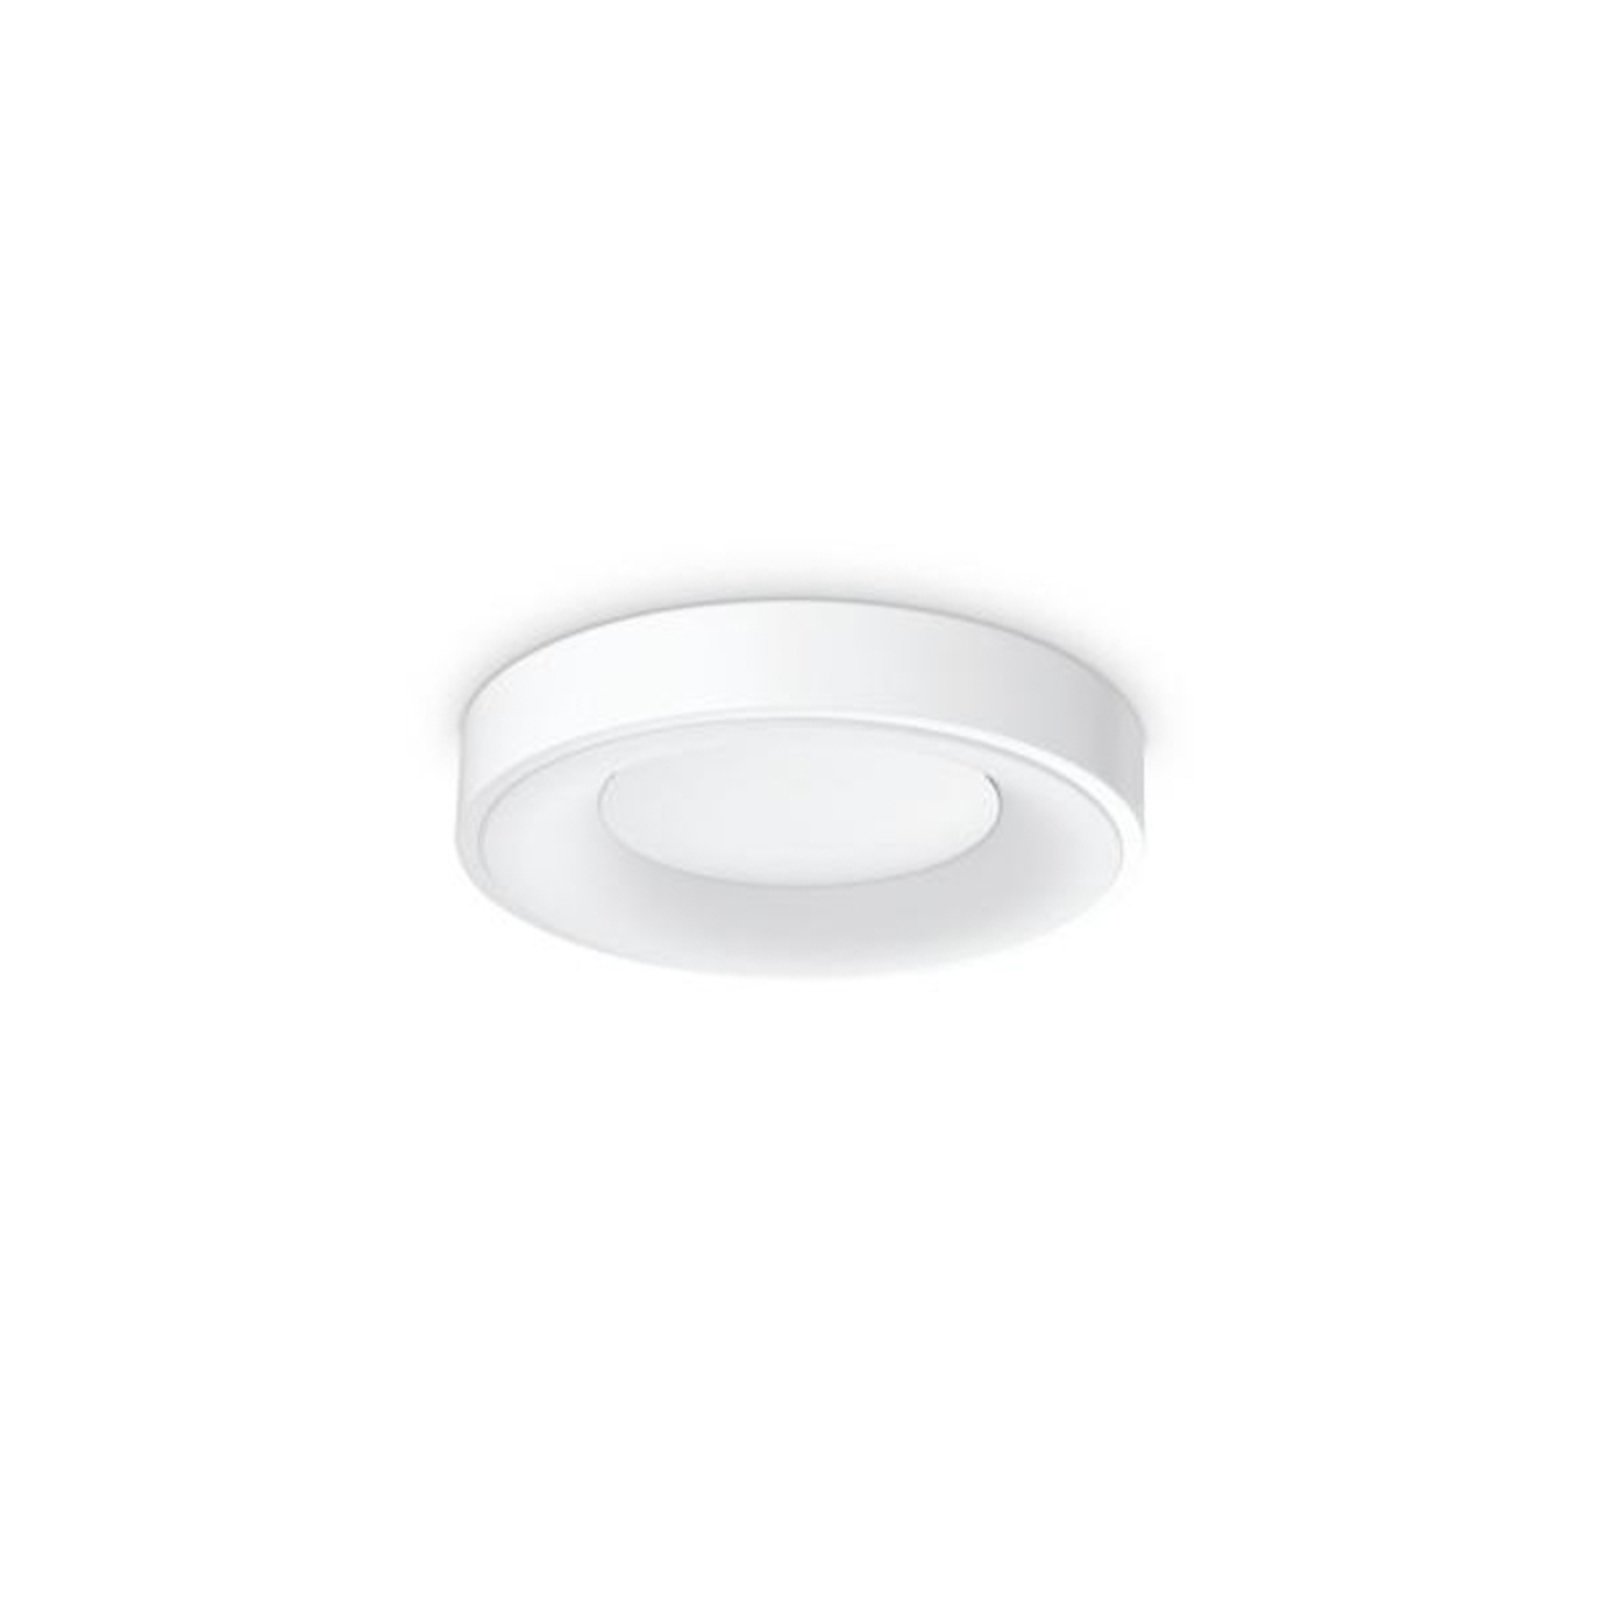 Ideal Lux LED ceiling light Planet, white, Ø 30 cm, metal